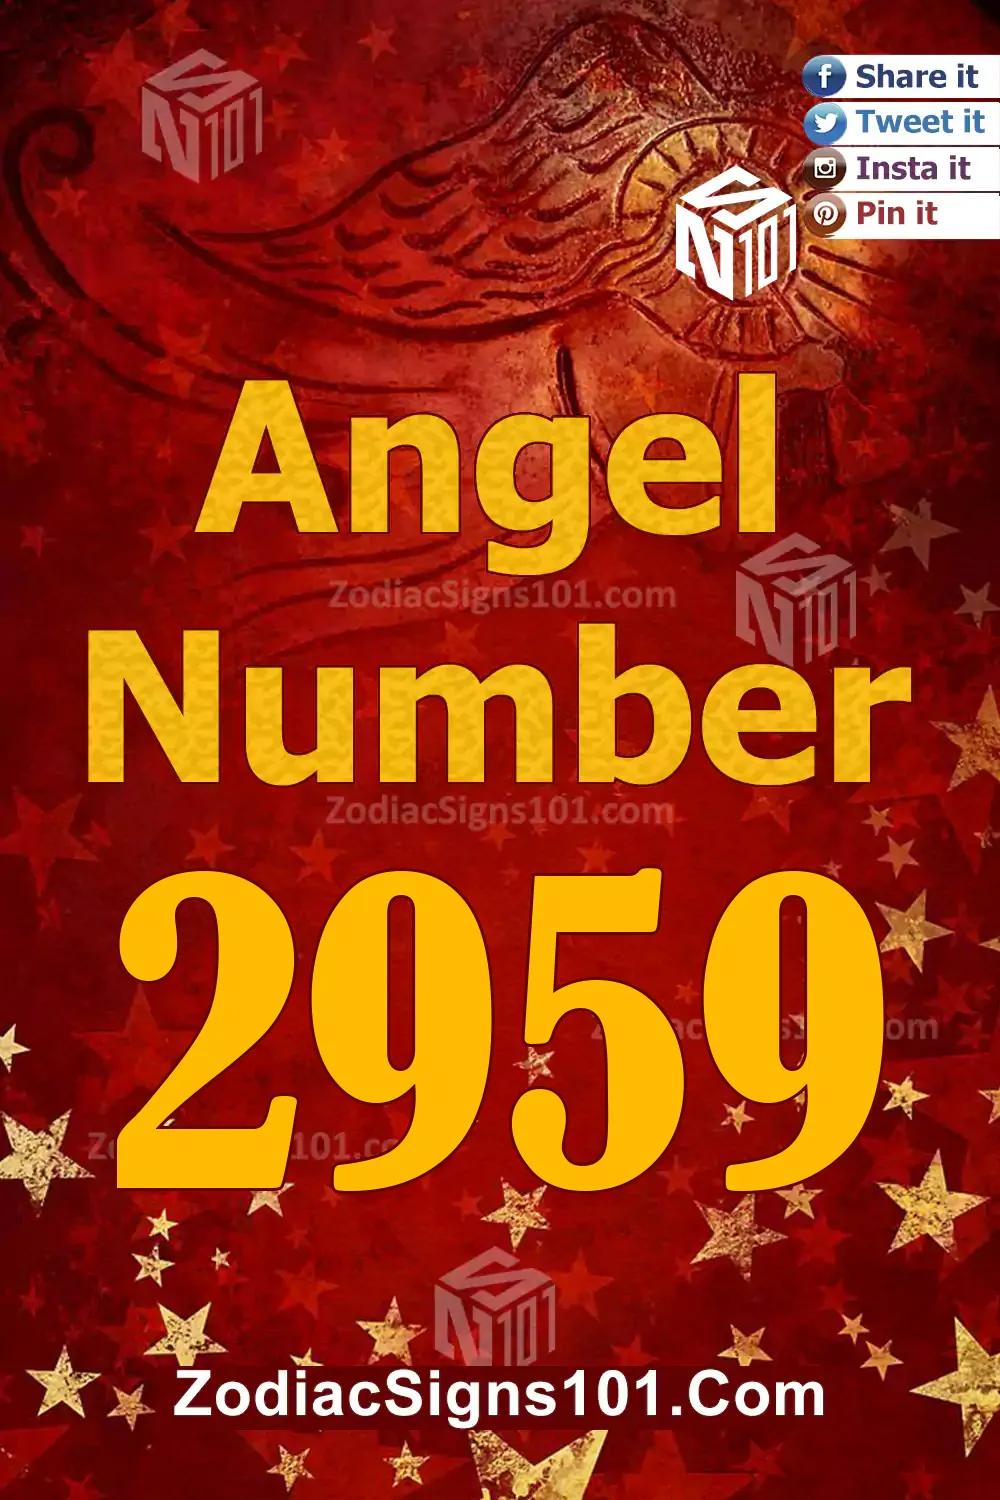 2959-Angel-Number-Meaning.jpg